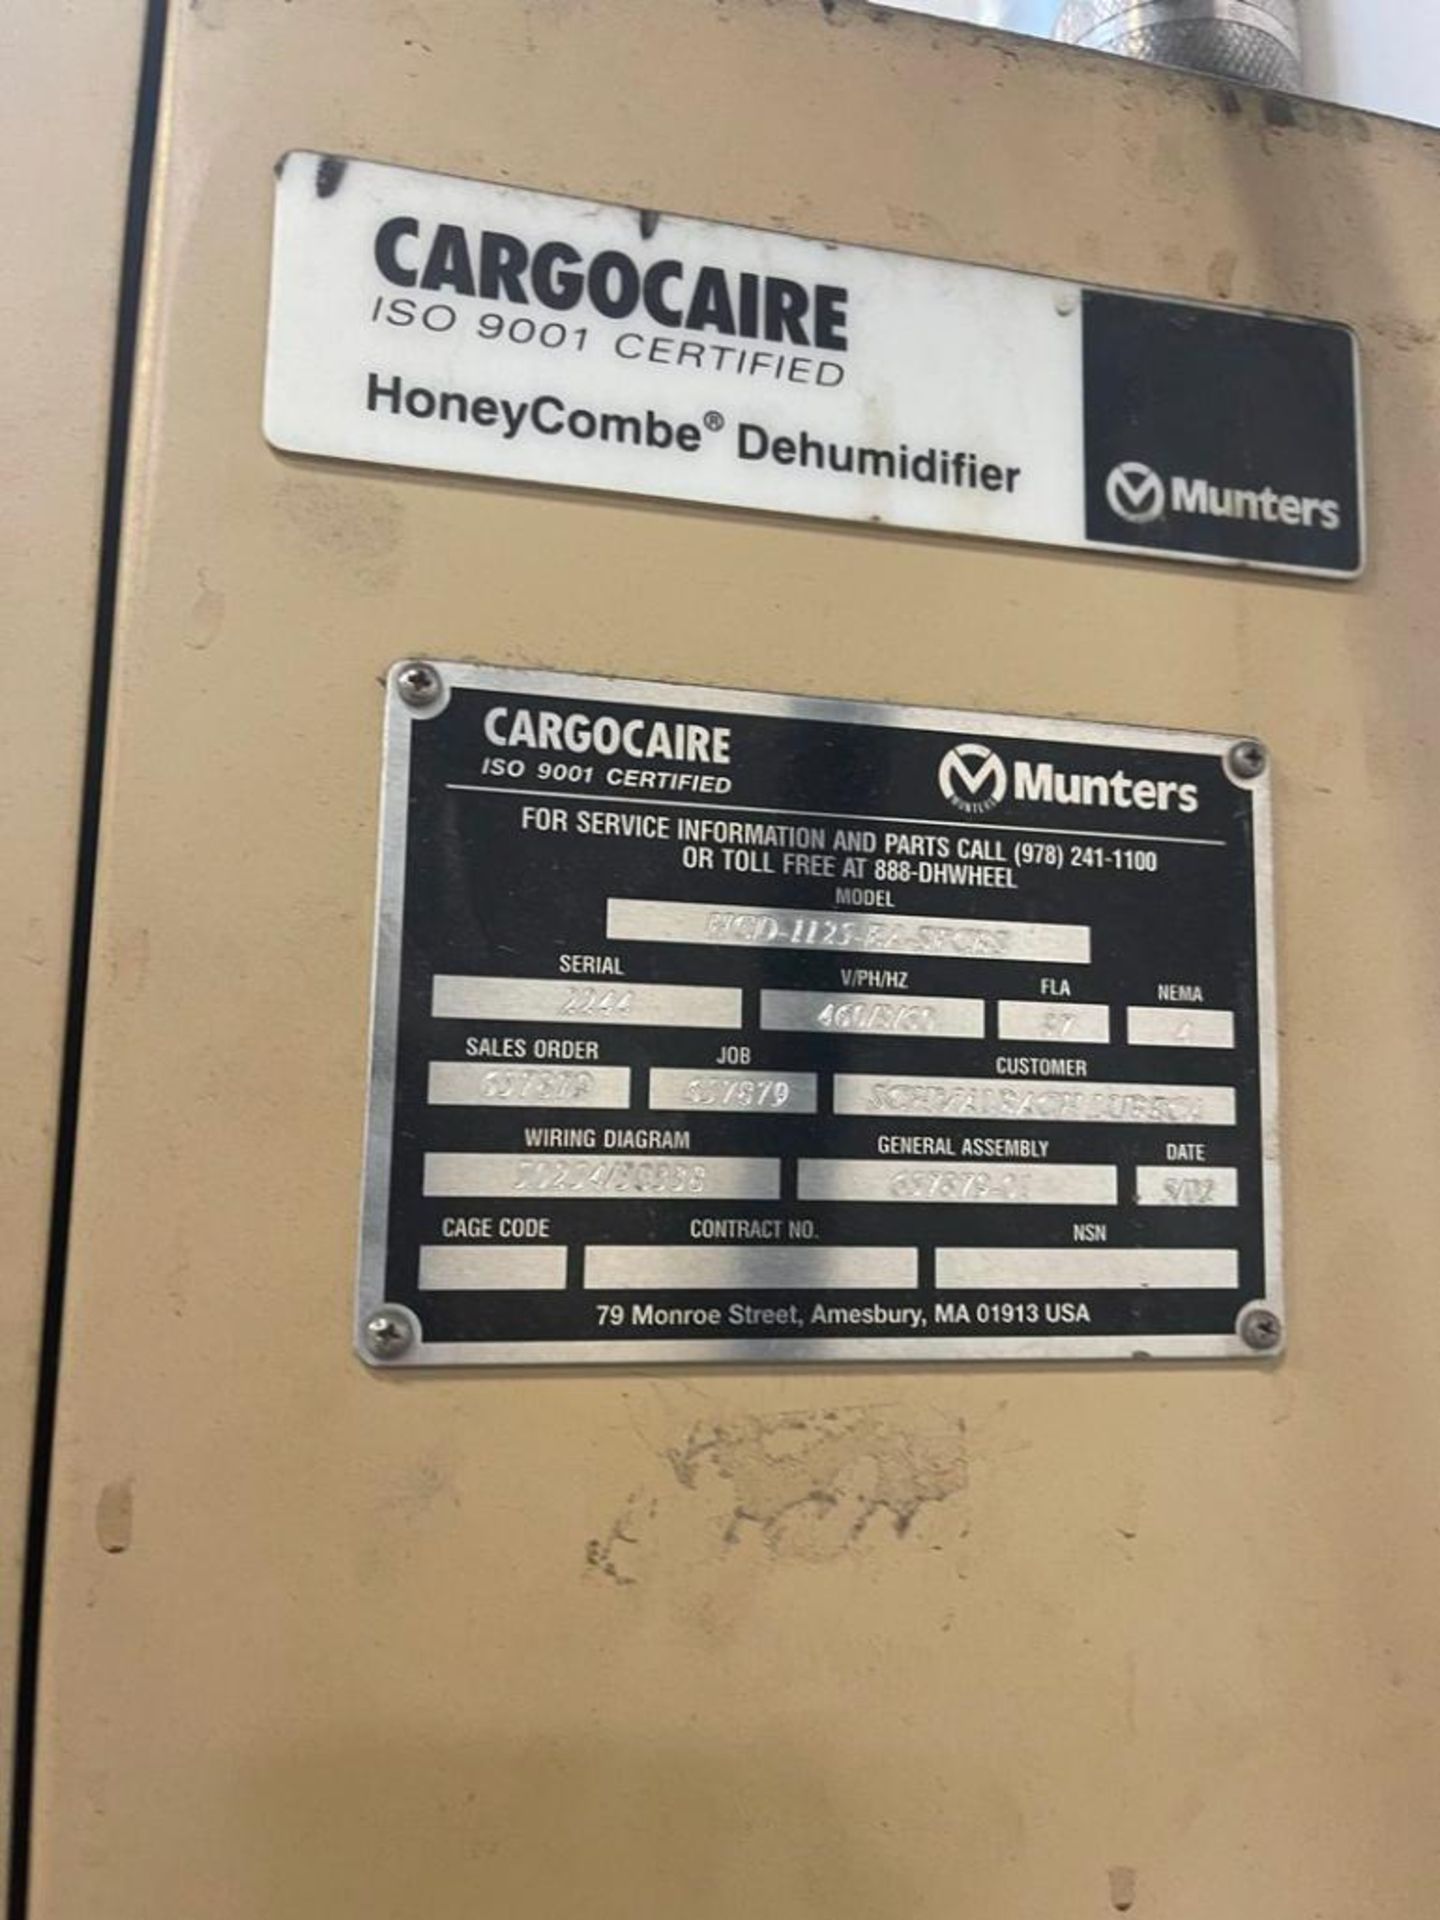 Munters Cargocaire HCD-1125-EA-SFCBS HoneyCombe Dehumidifier - Image 3 of 4